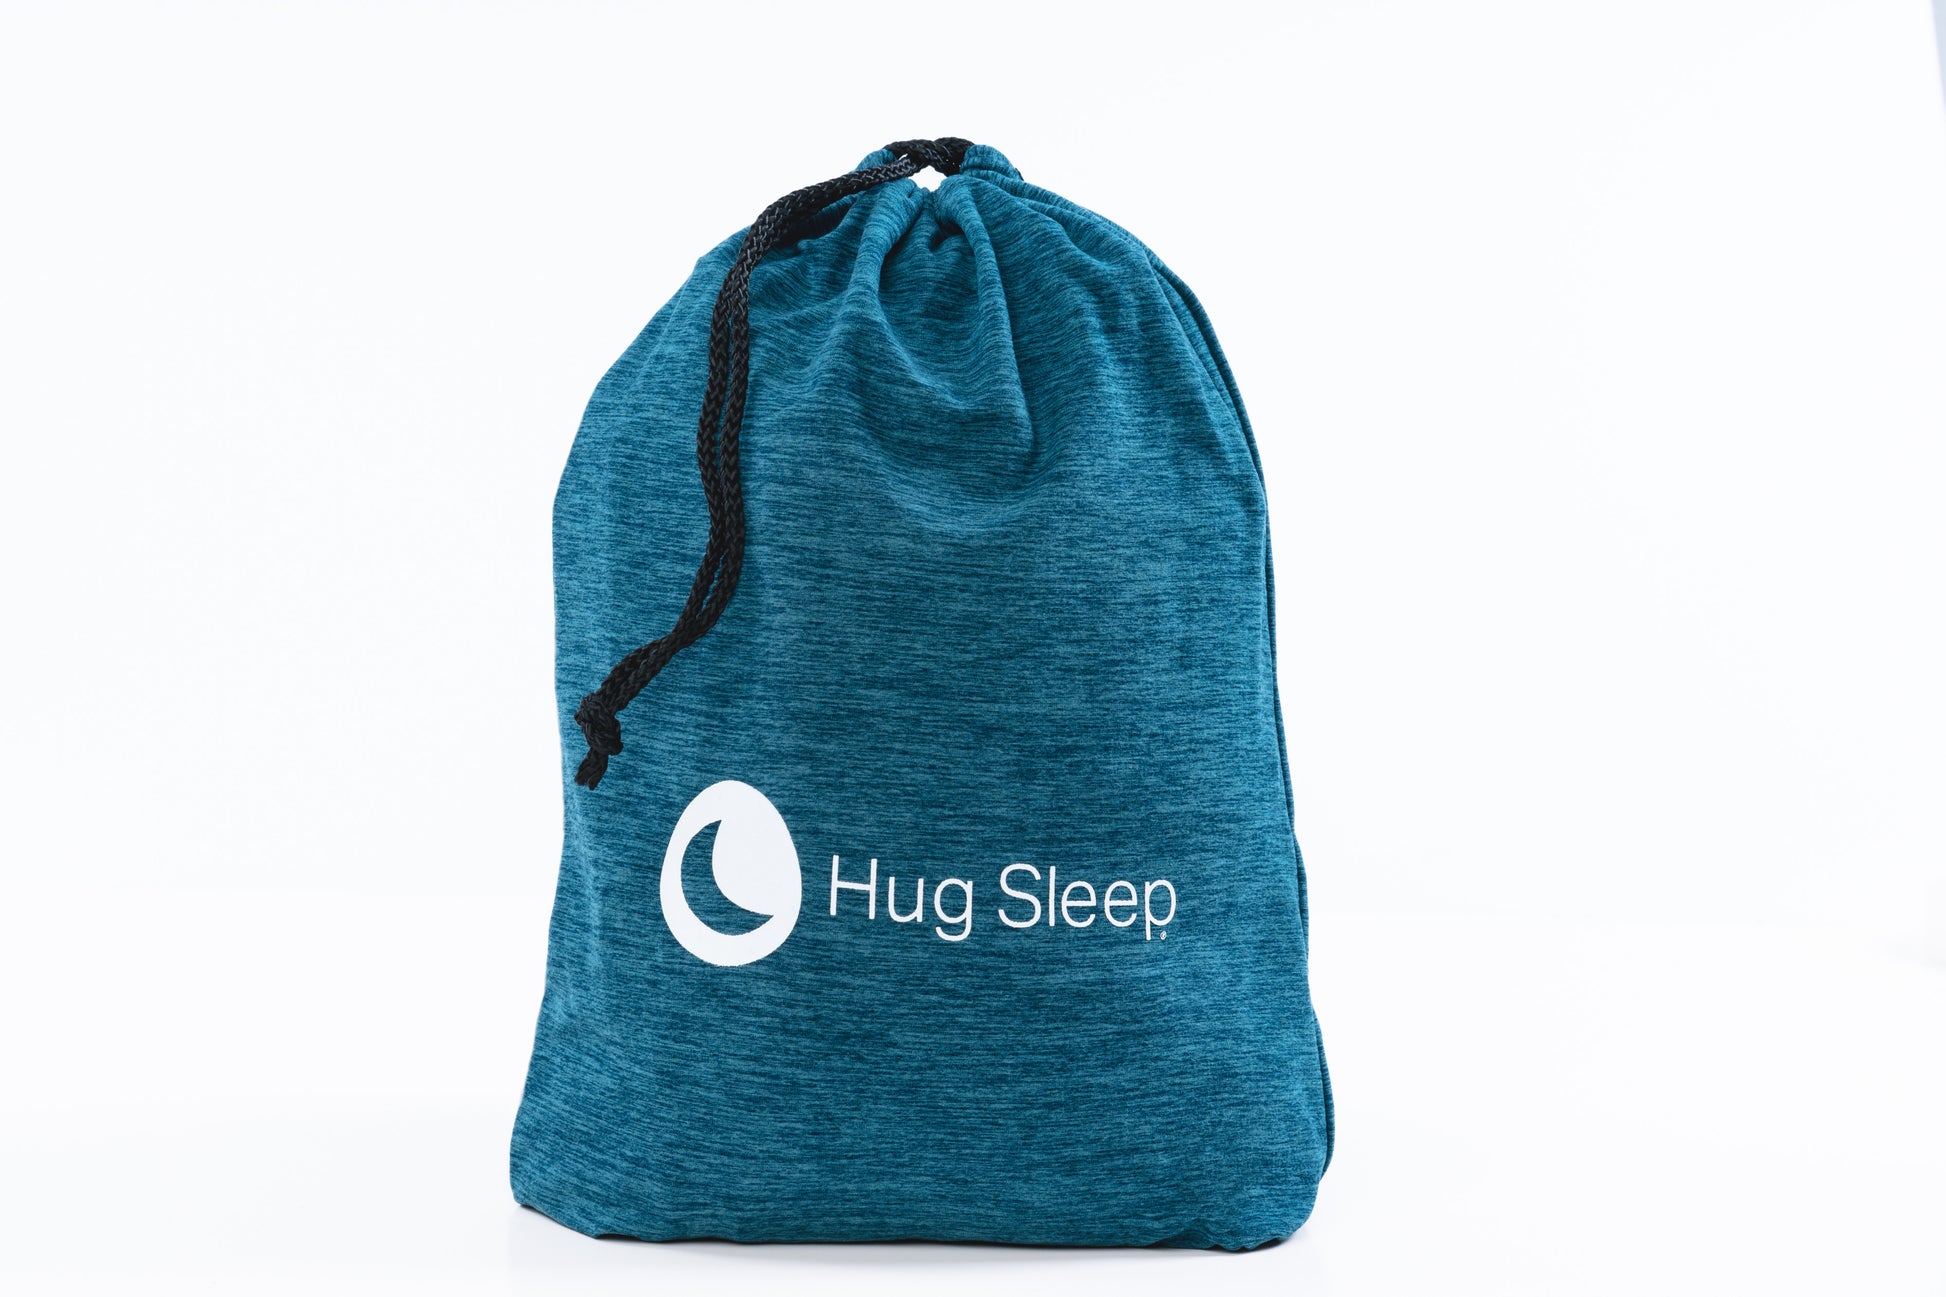 image of hug stretch bag